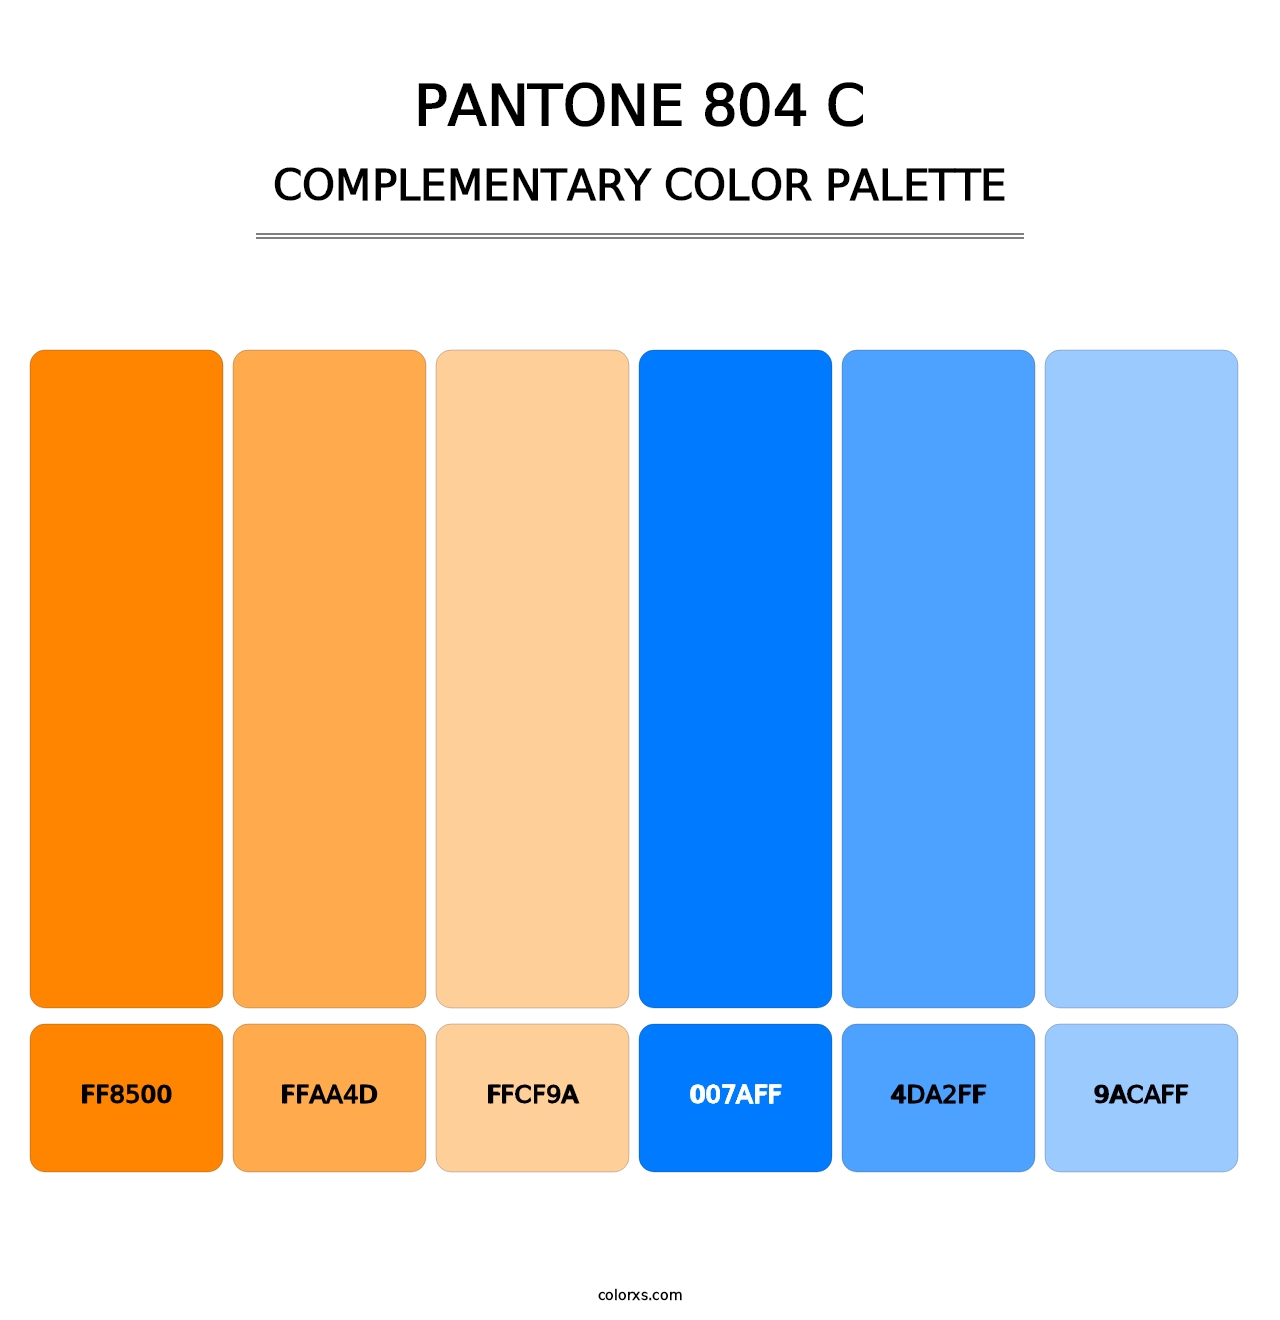 PANTONE 804 C - Complementary Color Palette